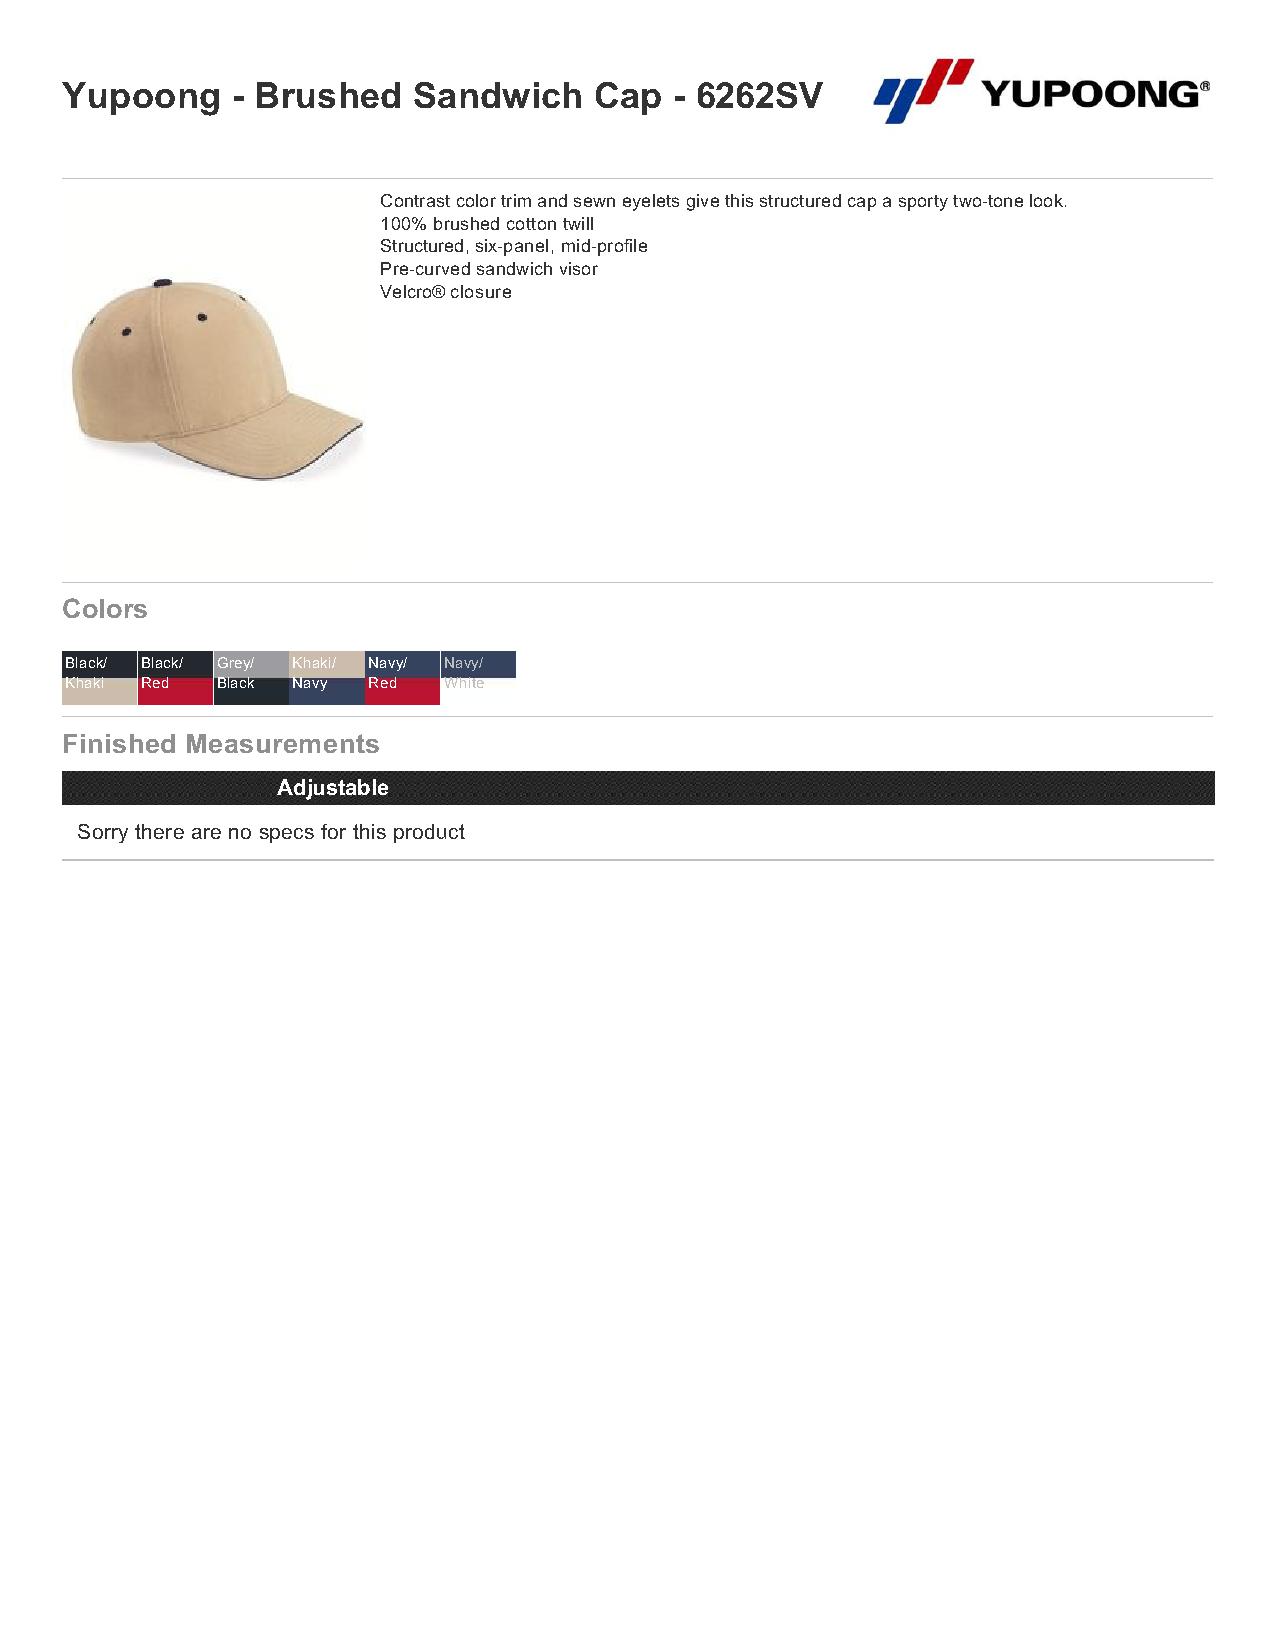 YuPoong 6262SV Brushed Sandwich Cap $3.52 - Headwear